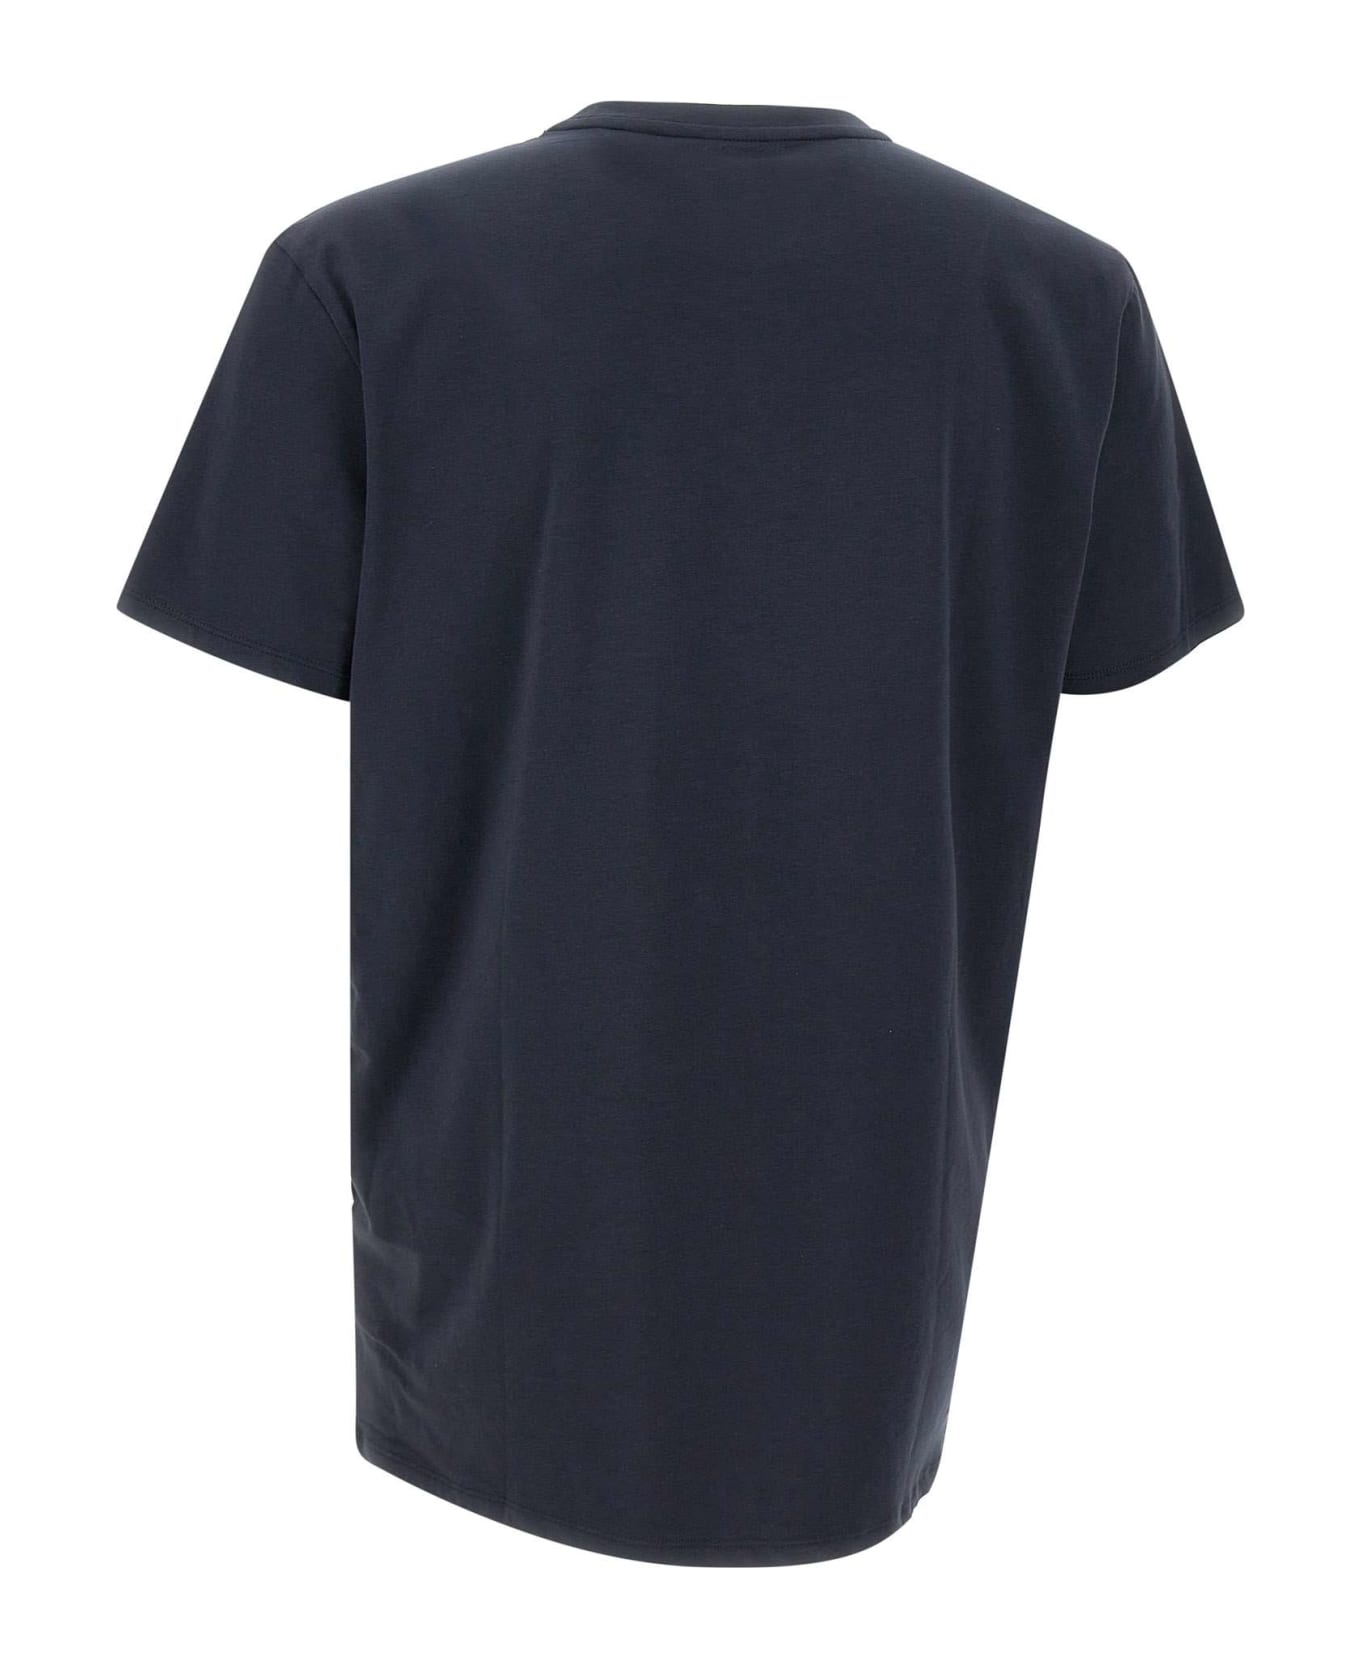 RRD - Roberto Ricci Design "revo Shirty" T-shirt - BLUE